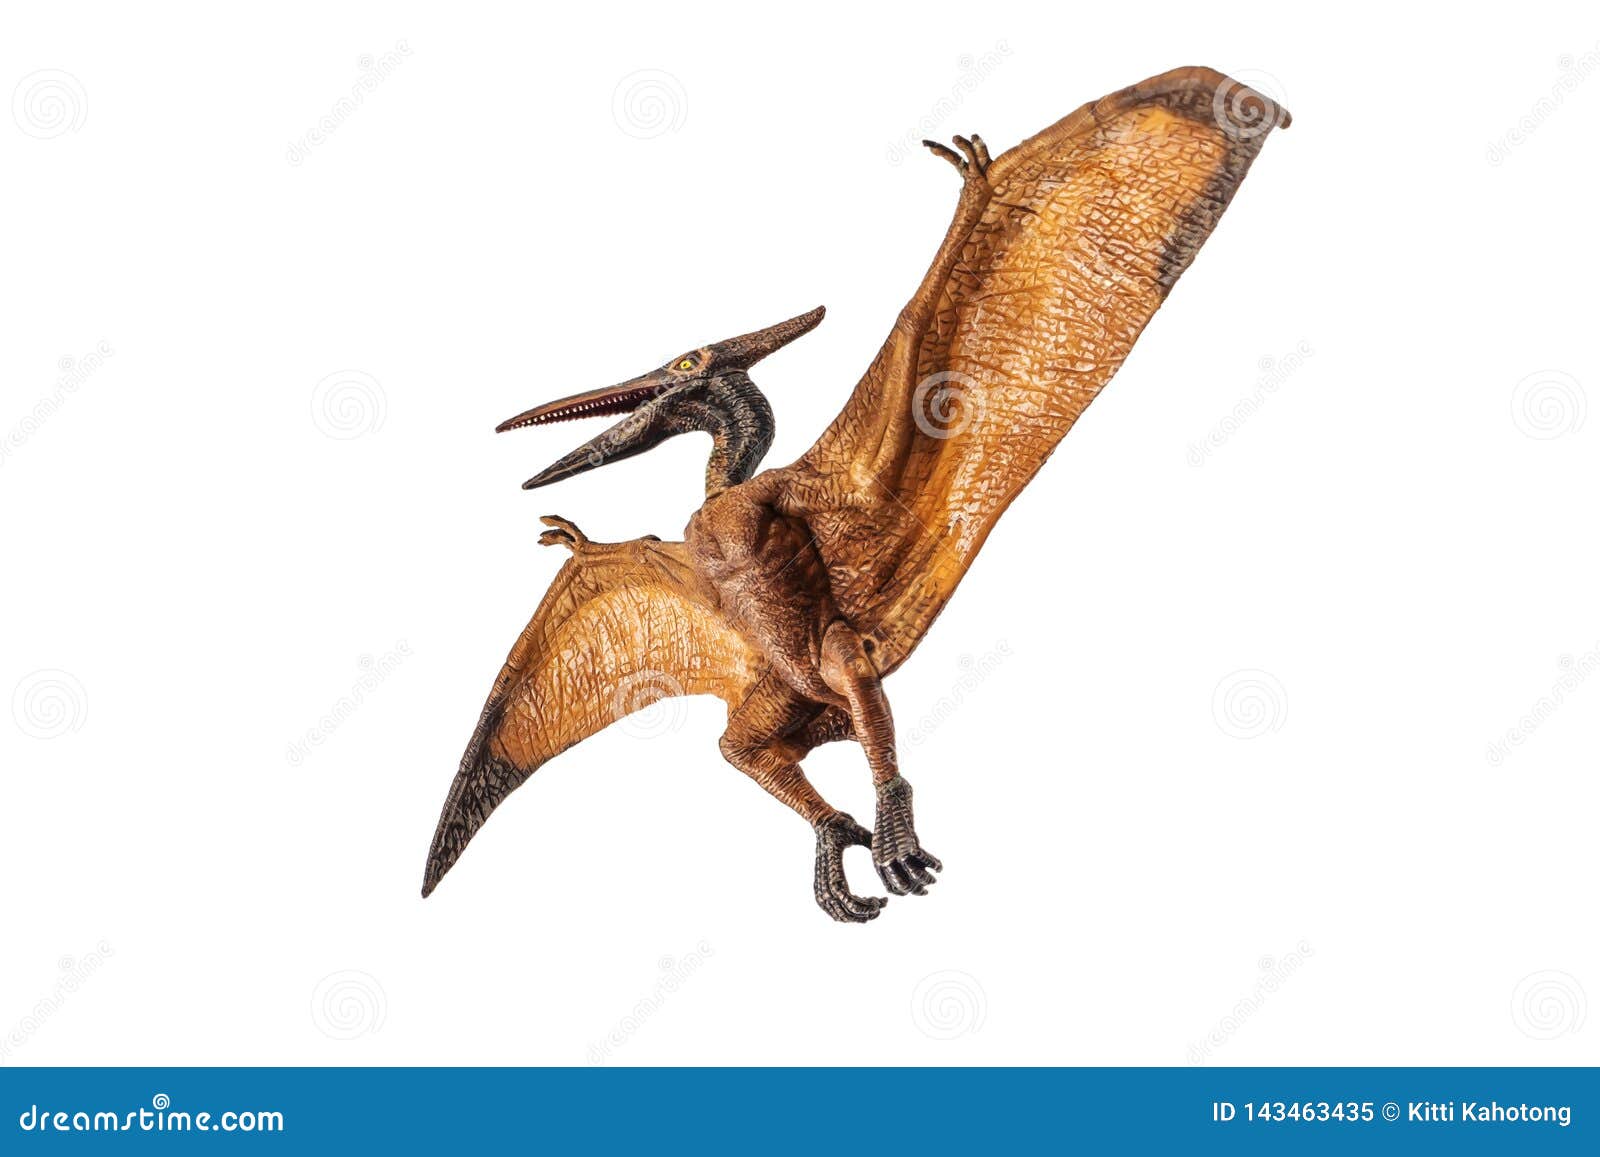 Pterodactyl Or Pteranodon Dinosaur Isolated Over White Stock Photo